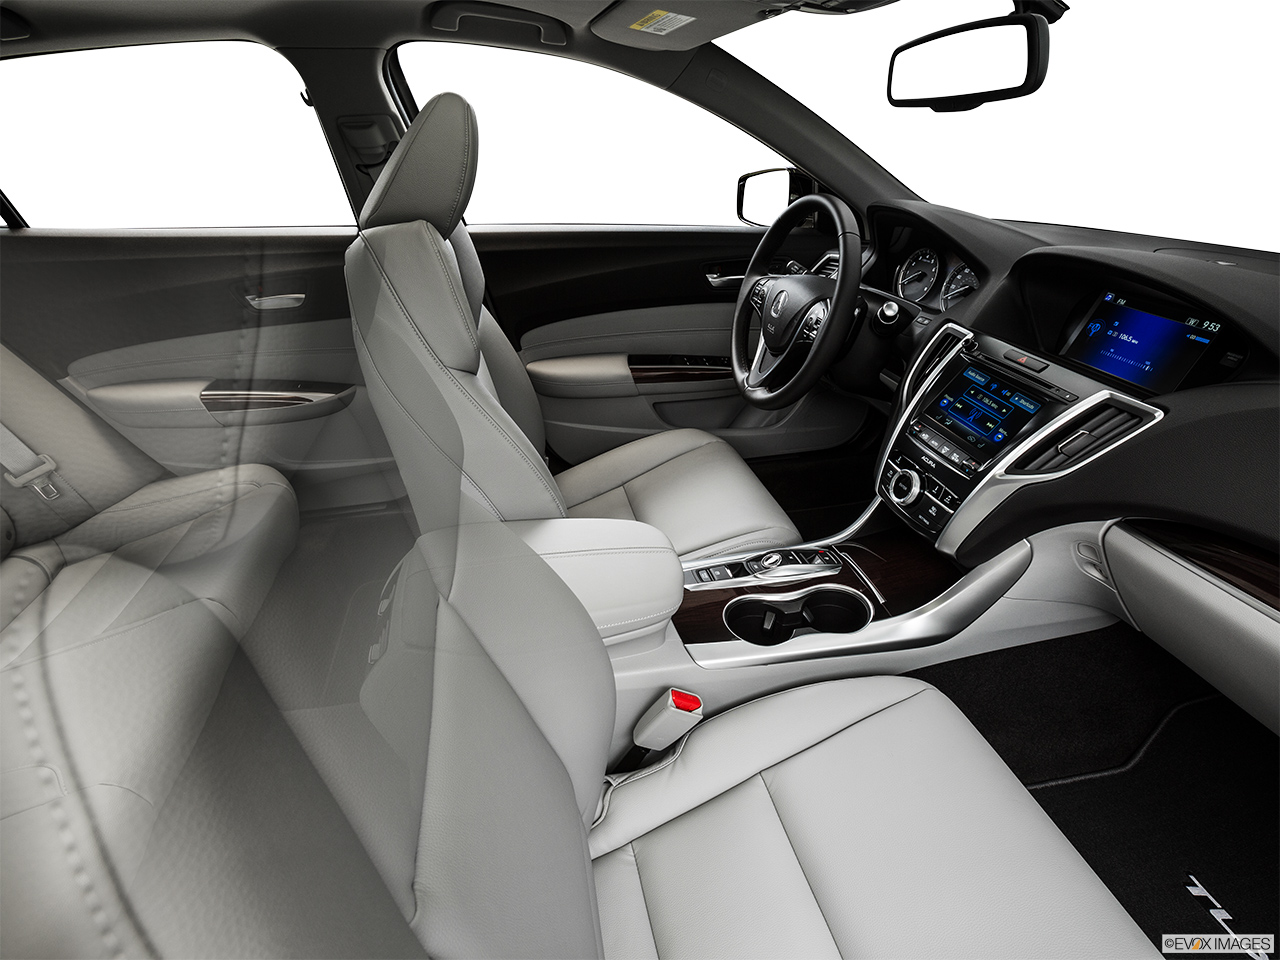 2016 Acura TLX 3.5 V-6 9-AT P-AWS Fake Buck Shot - Interior from Passenger B pillar. 